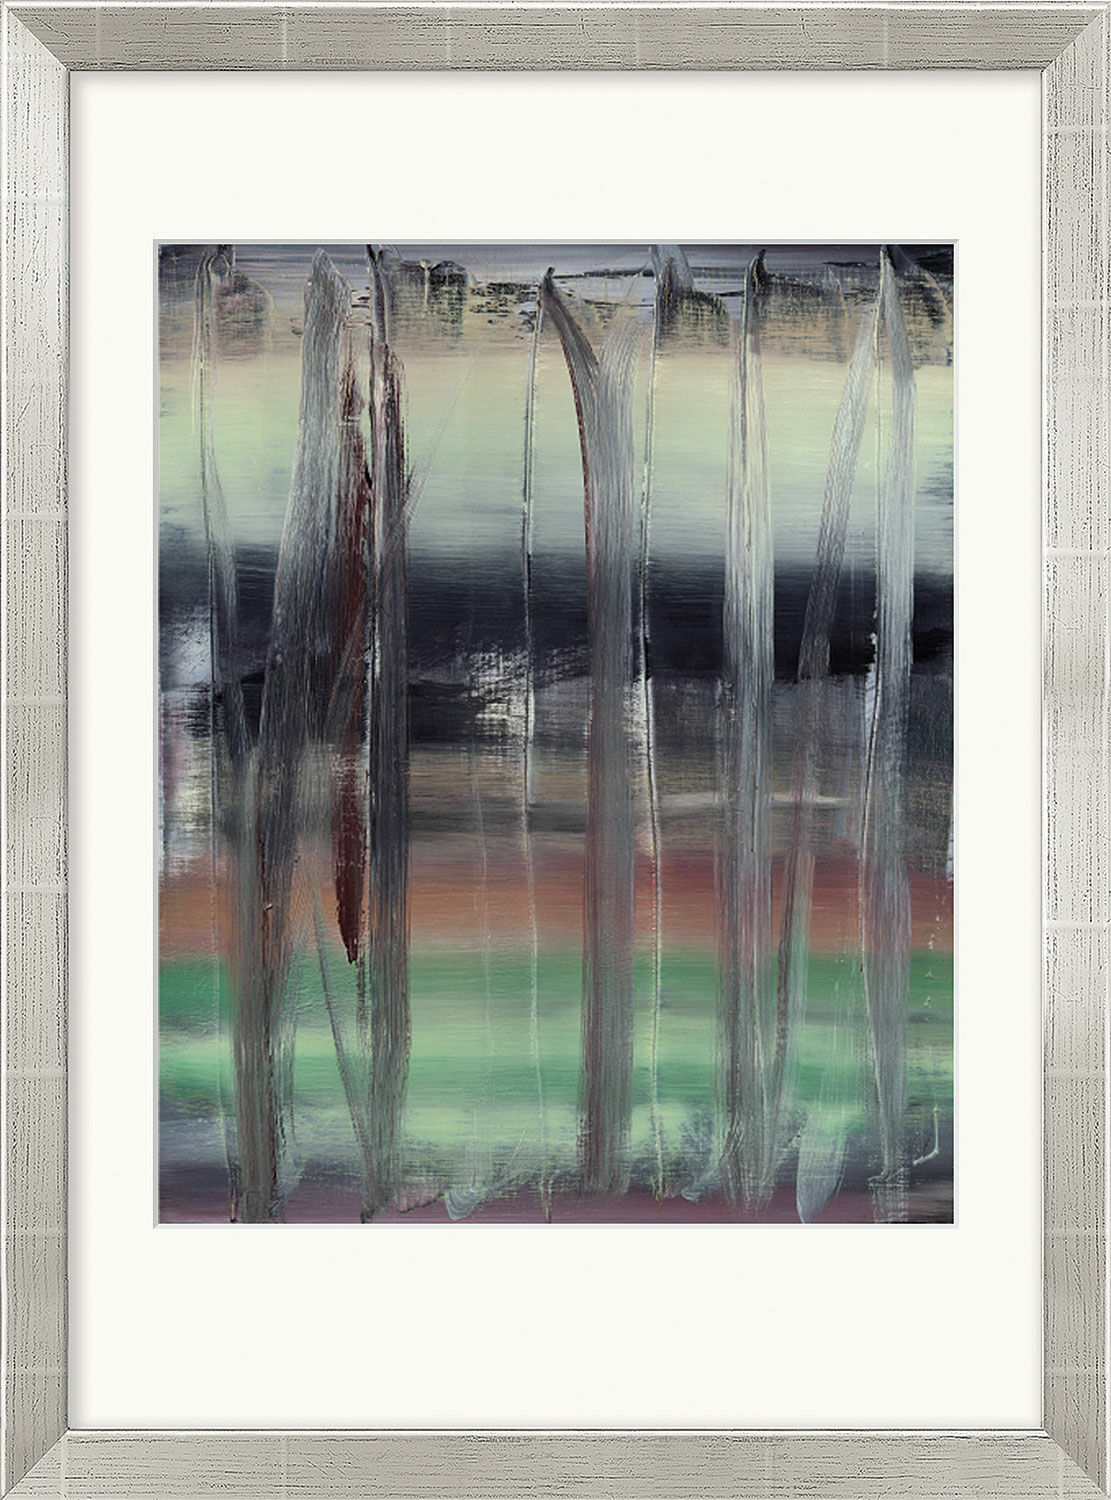 Beeld "Abstract Picture" (1992), ingelijst von Gerhard Richter